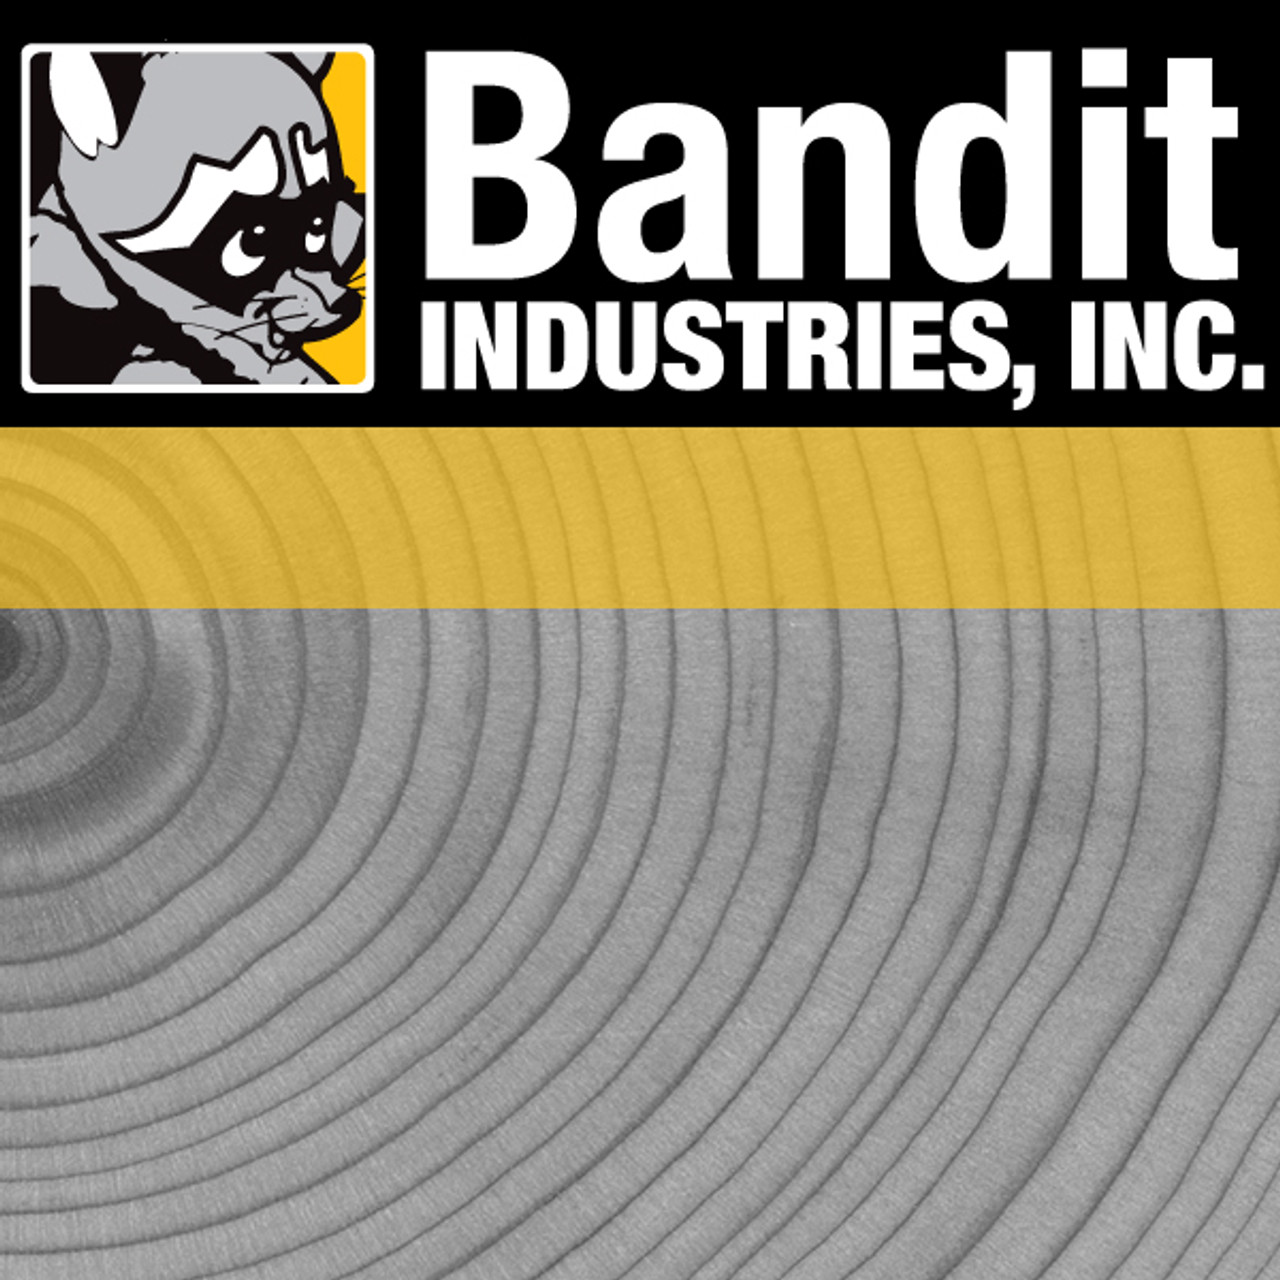 900-1920-39: BANDIT BELT, 5VK2500/5 POWER PLUS MAXIBAND (SINGLE)